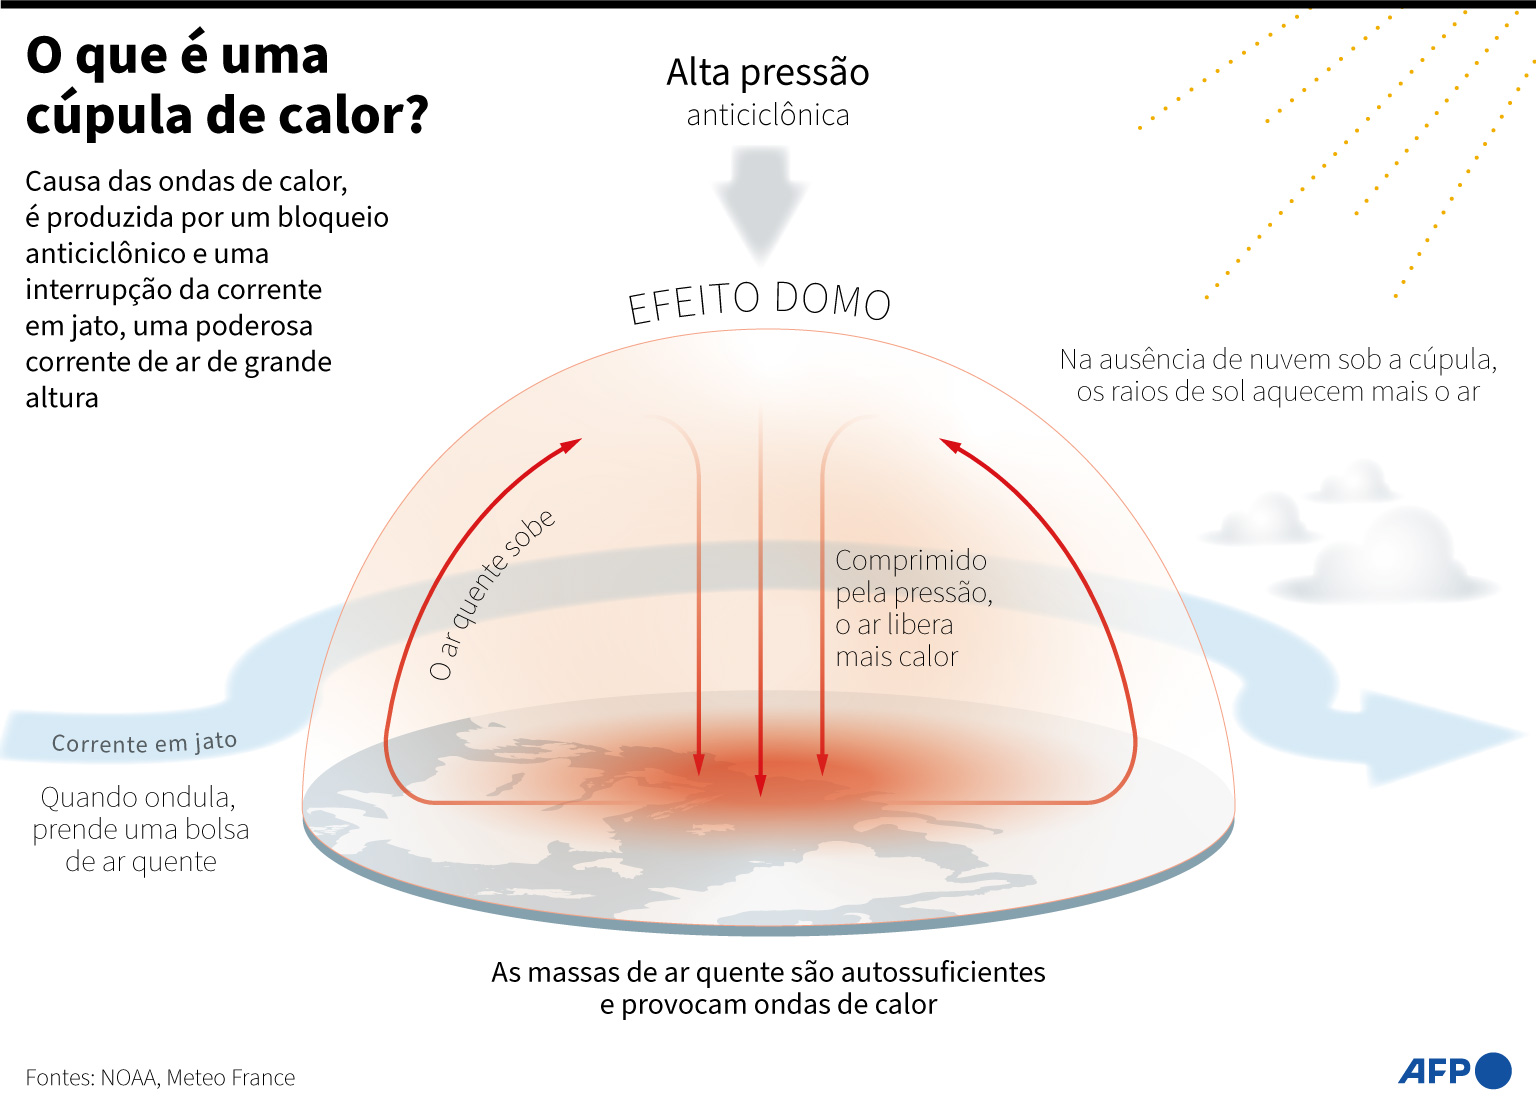 Média do índice ceo-d no Brasil, Canadá e Estados Unidos Fonte